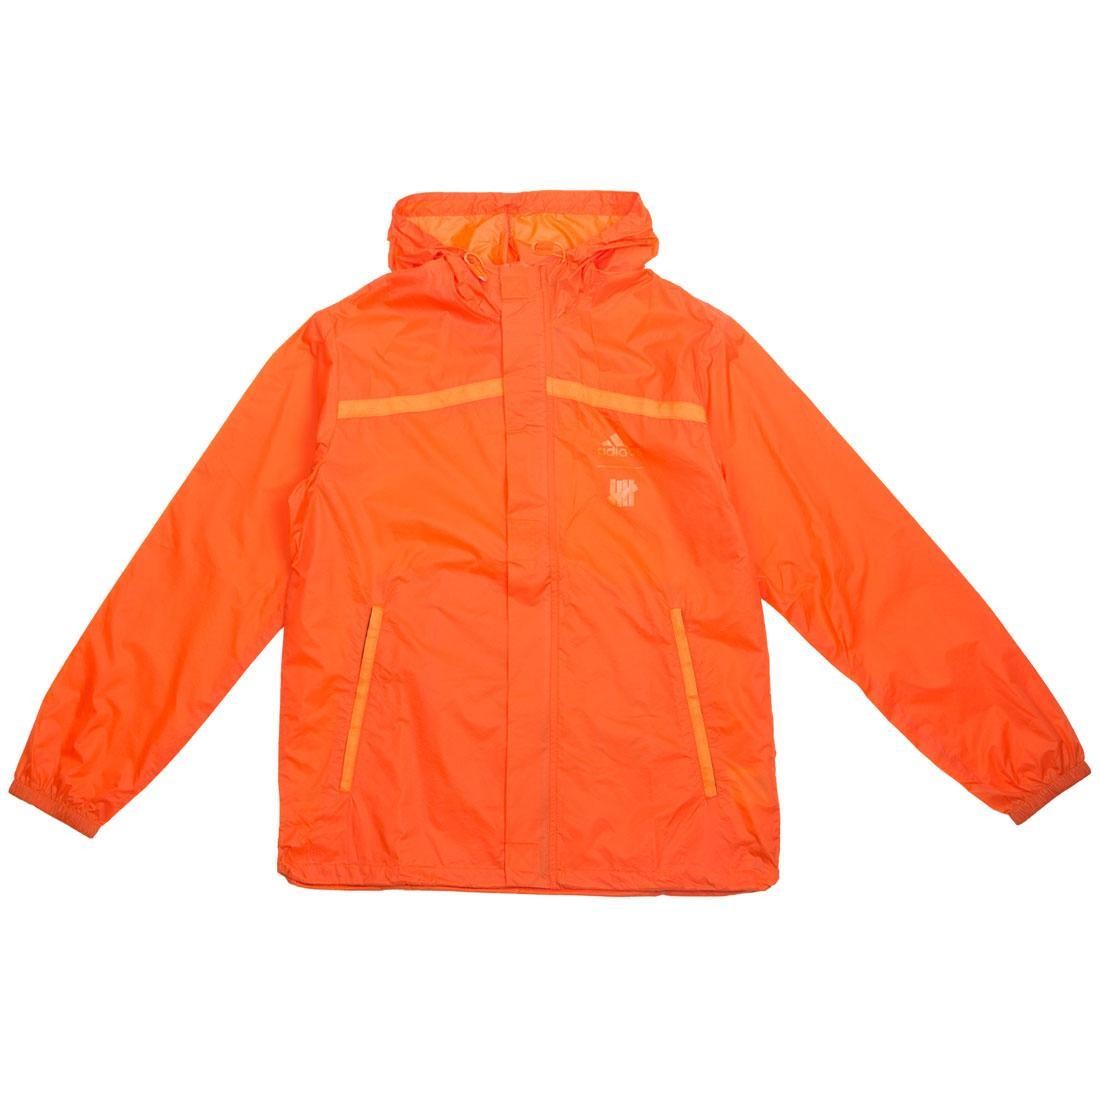 adidas orange rain jacket